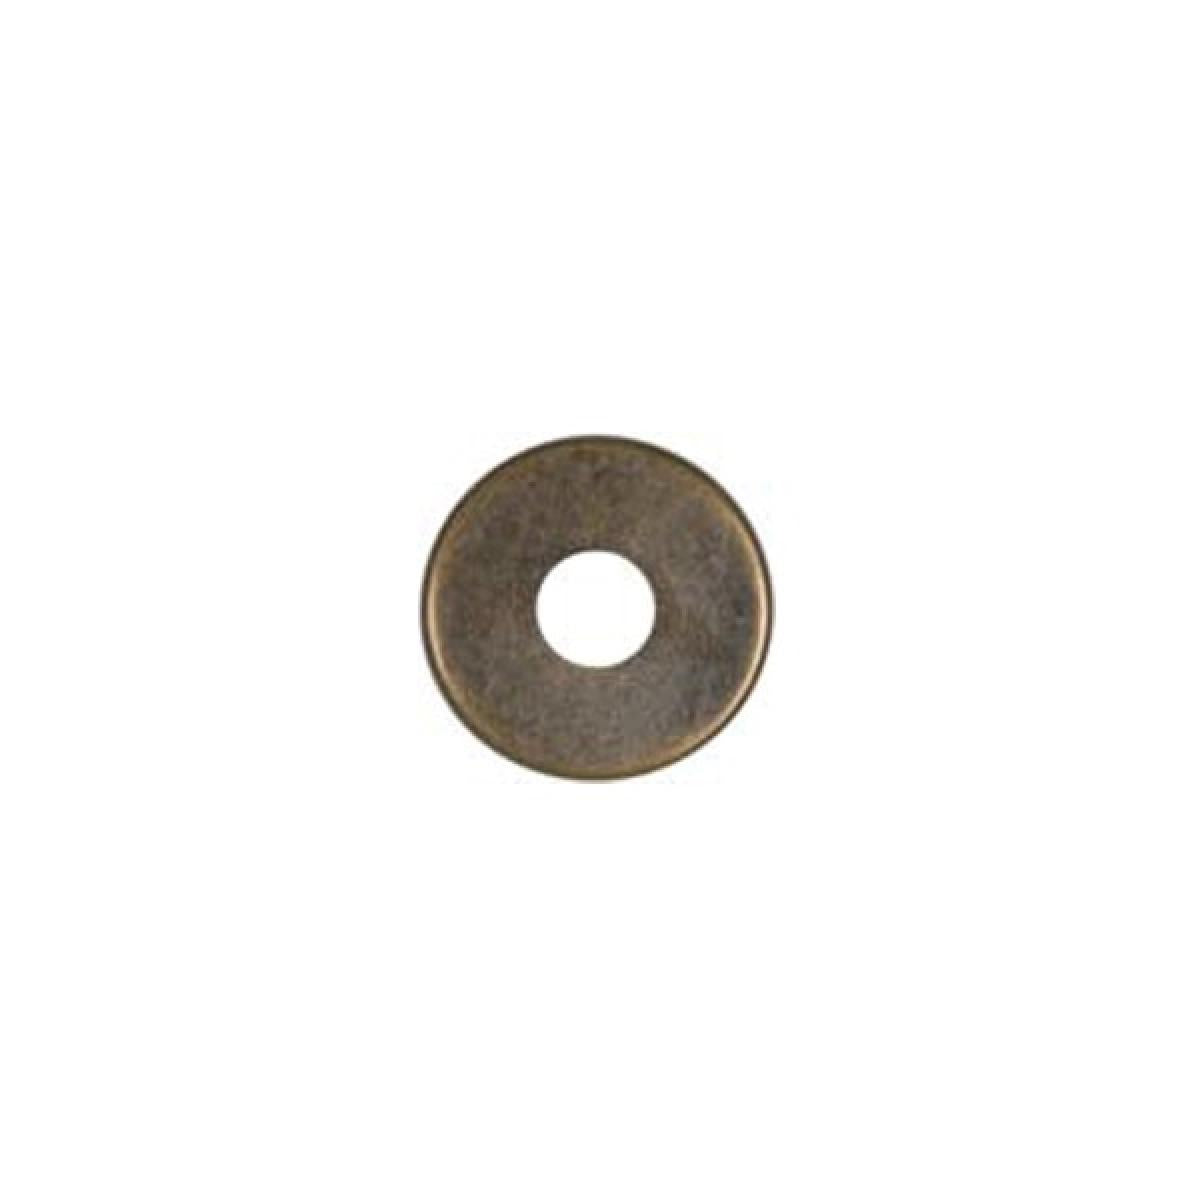 Satco 90-1838 Steel Check Ring Curled Edge 1/8 IP Slip Antique Brass Finish 1/2" Diameter